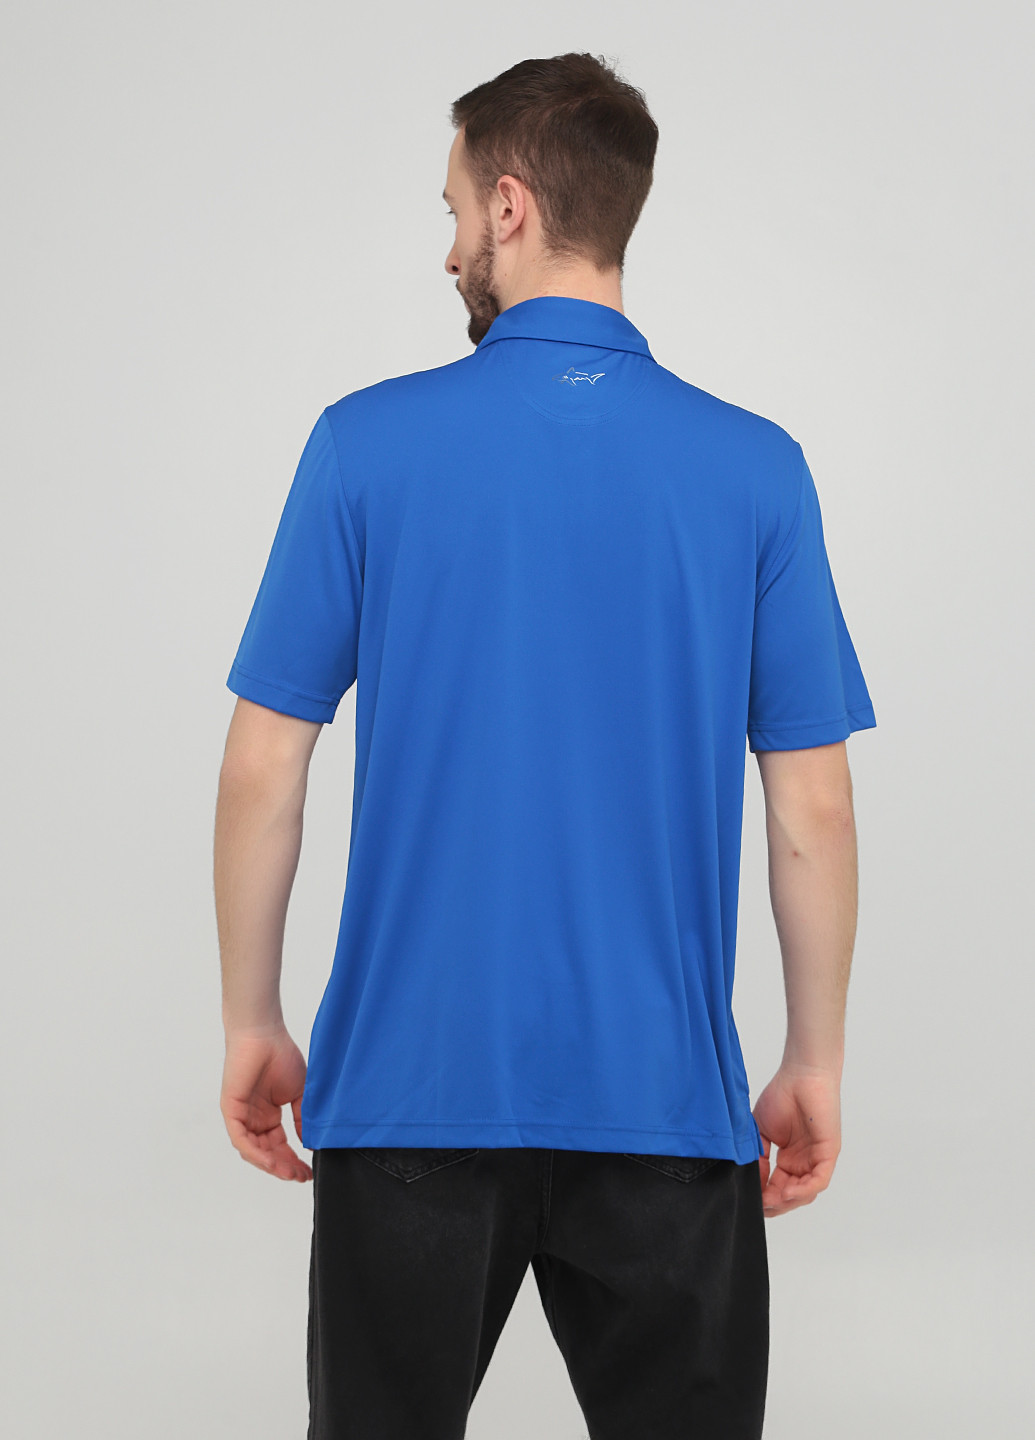 Синяя футболка-поло для мужчин Greg Norman однотонная